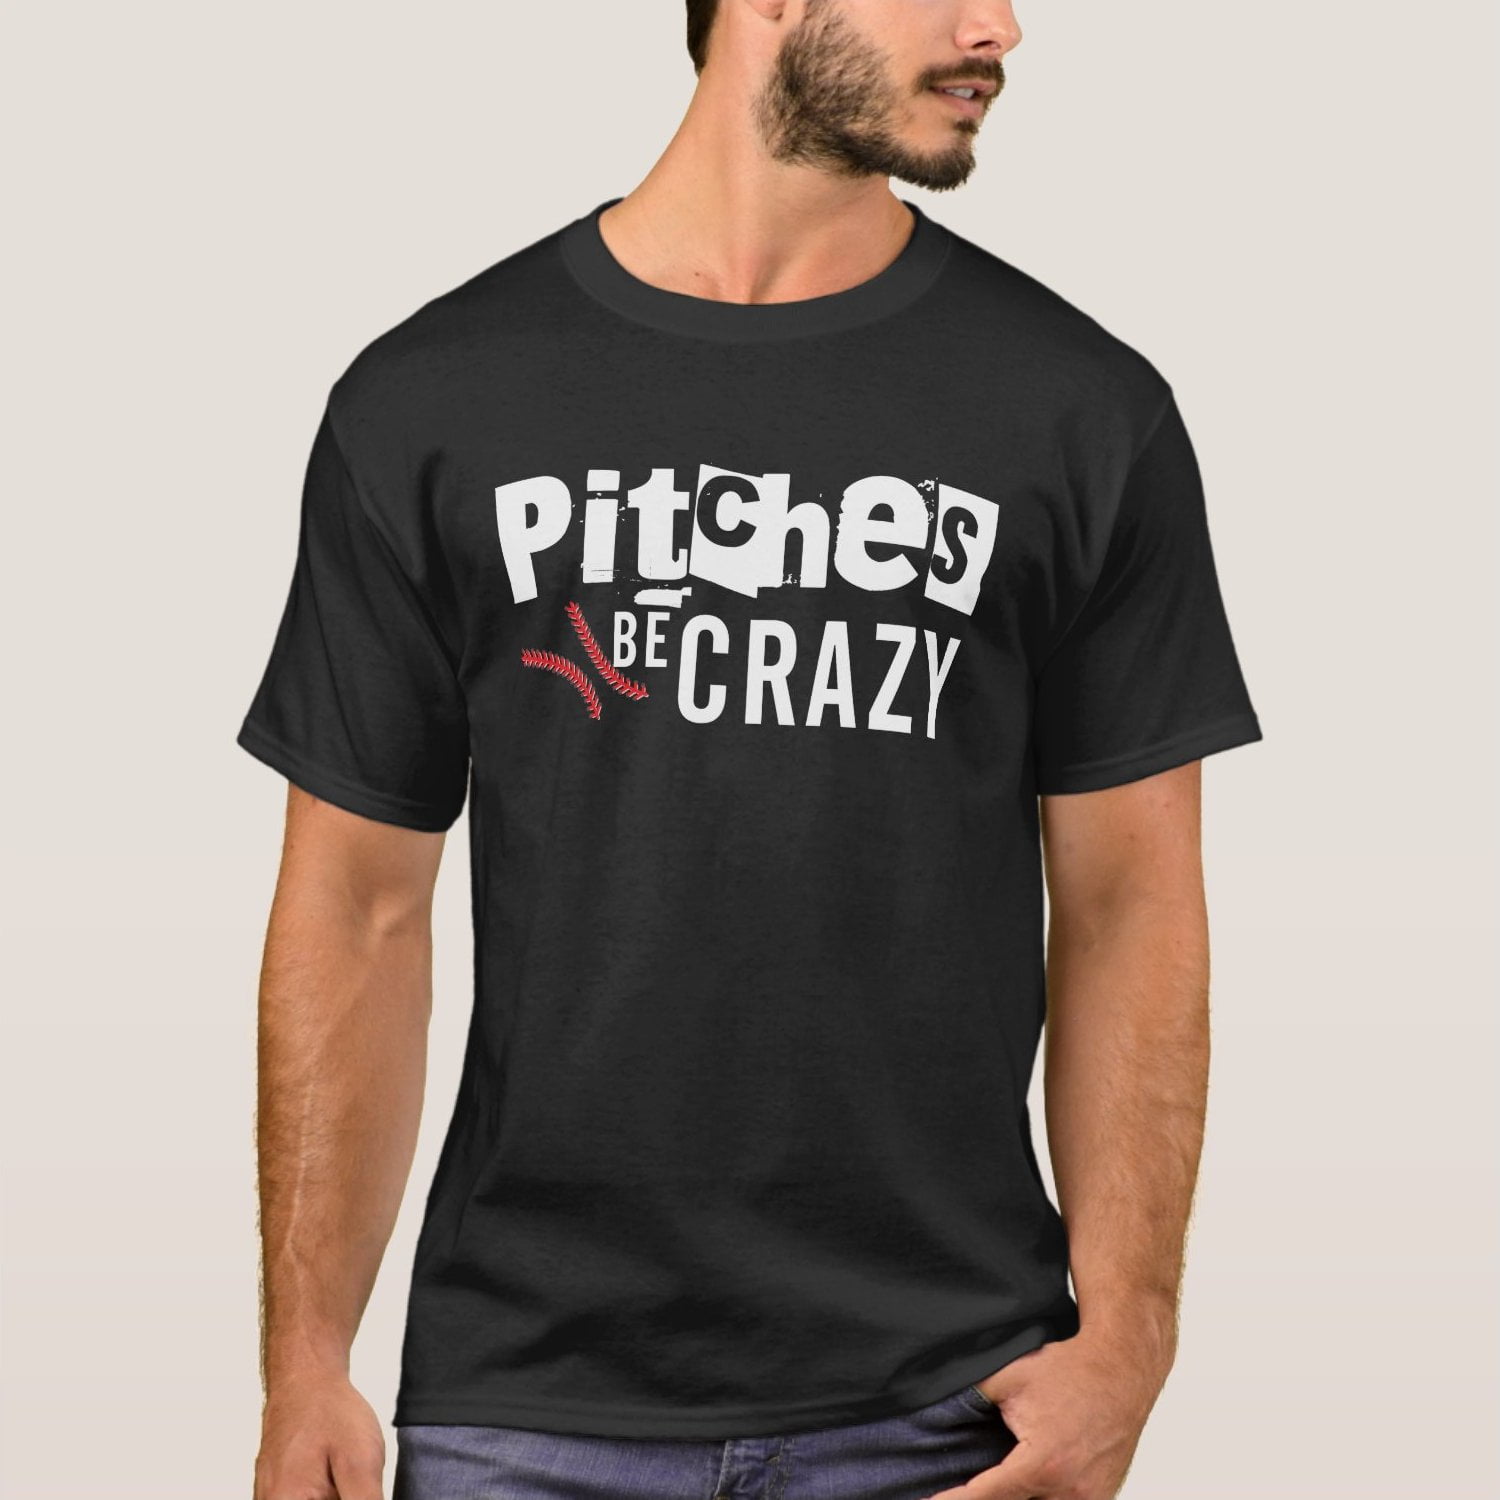 Pitches Be Crazy shirt bleached softball shirt softball shirt